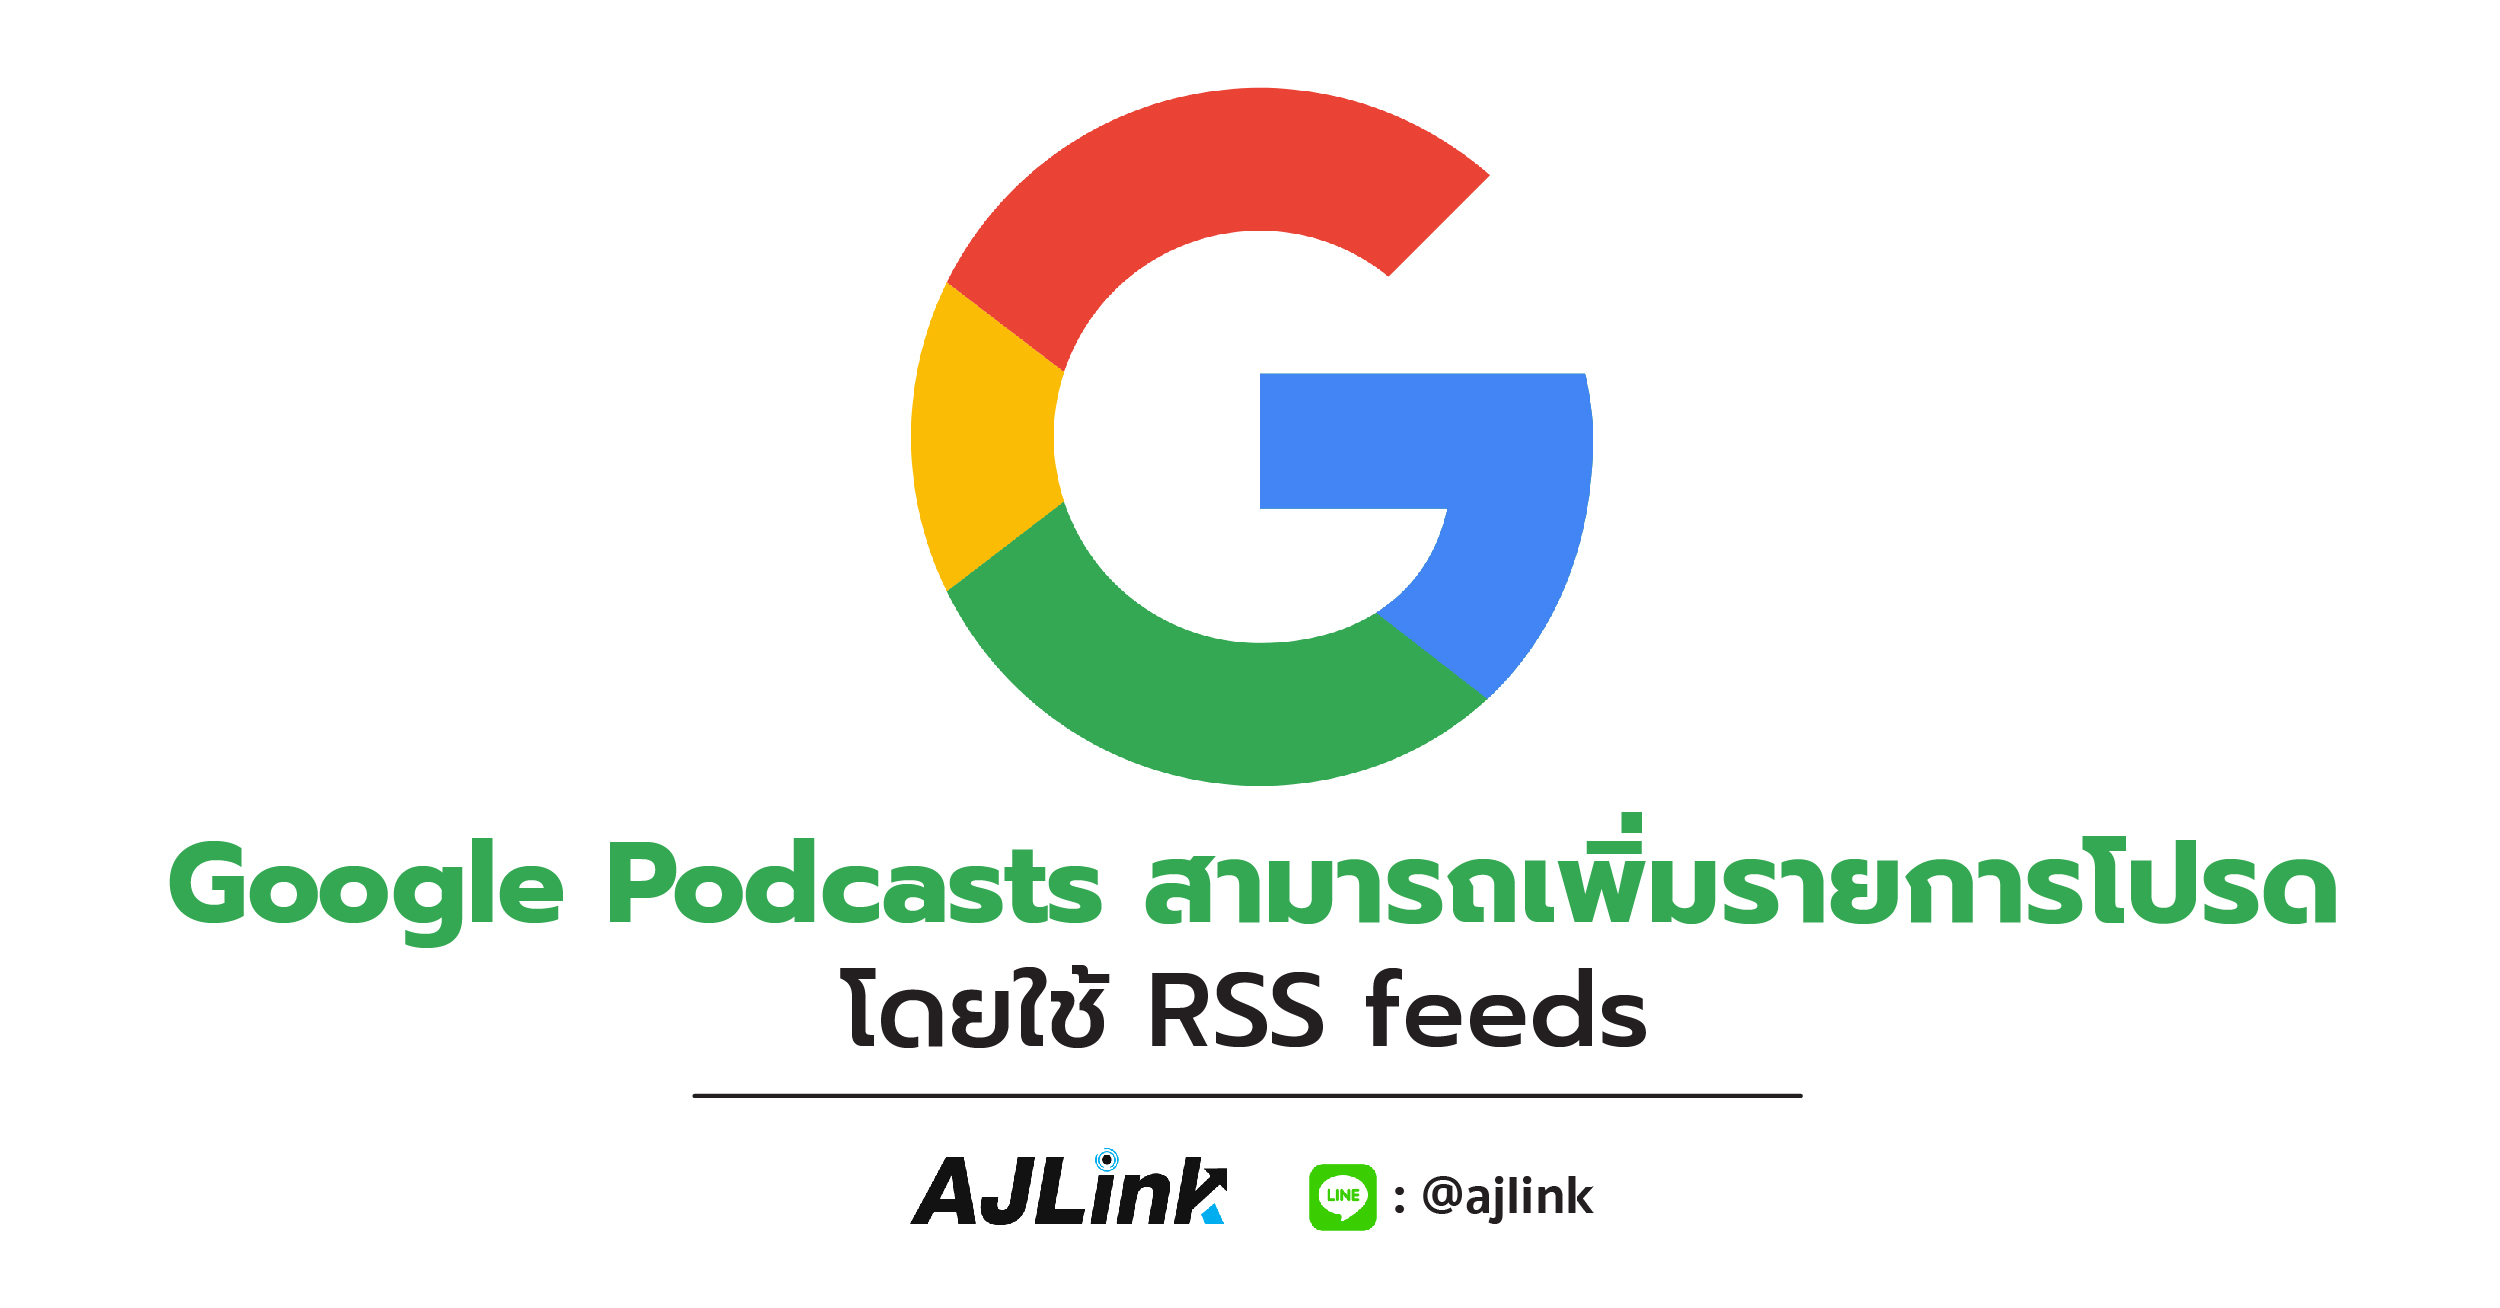 Google Podcasts สามารถเพิ่มรายการโปรด โดยใช้ RSS feeds